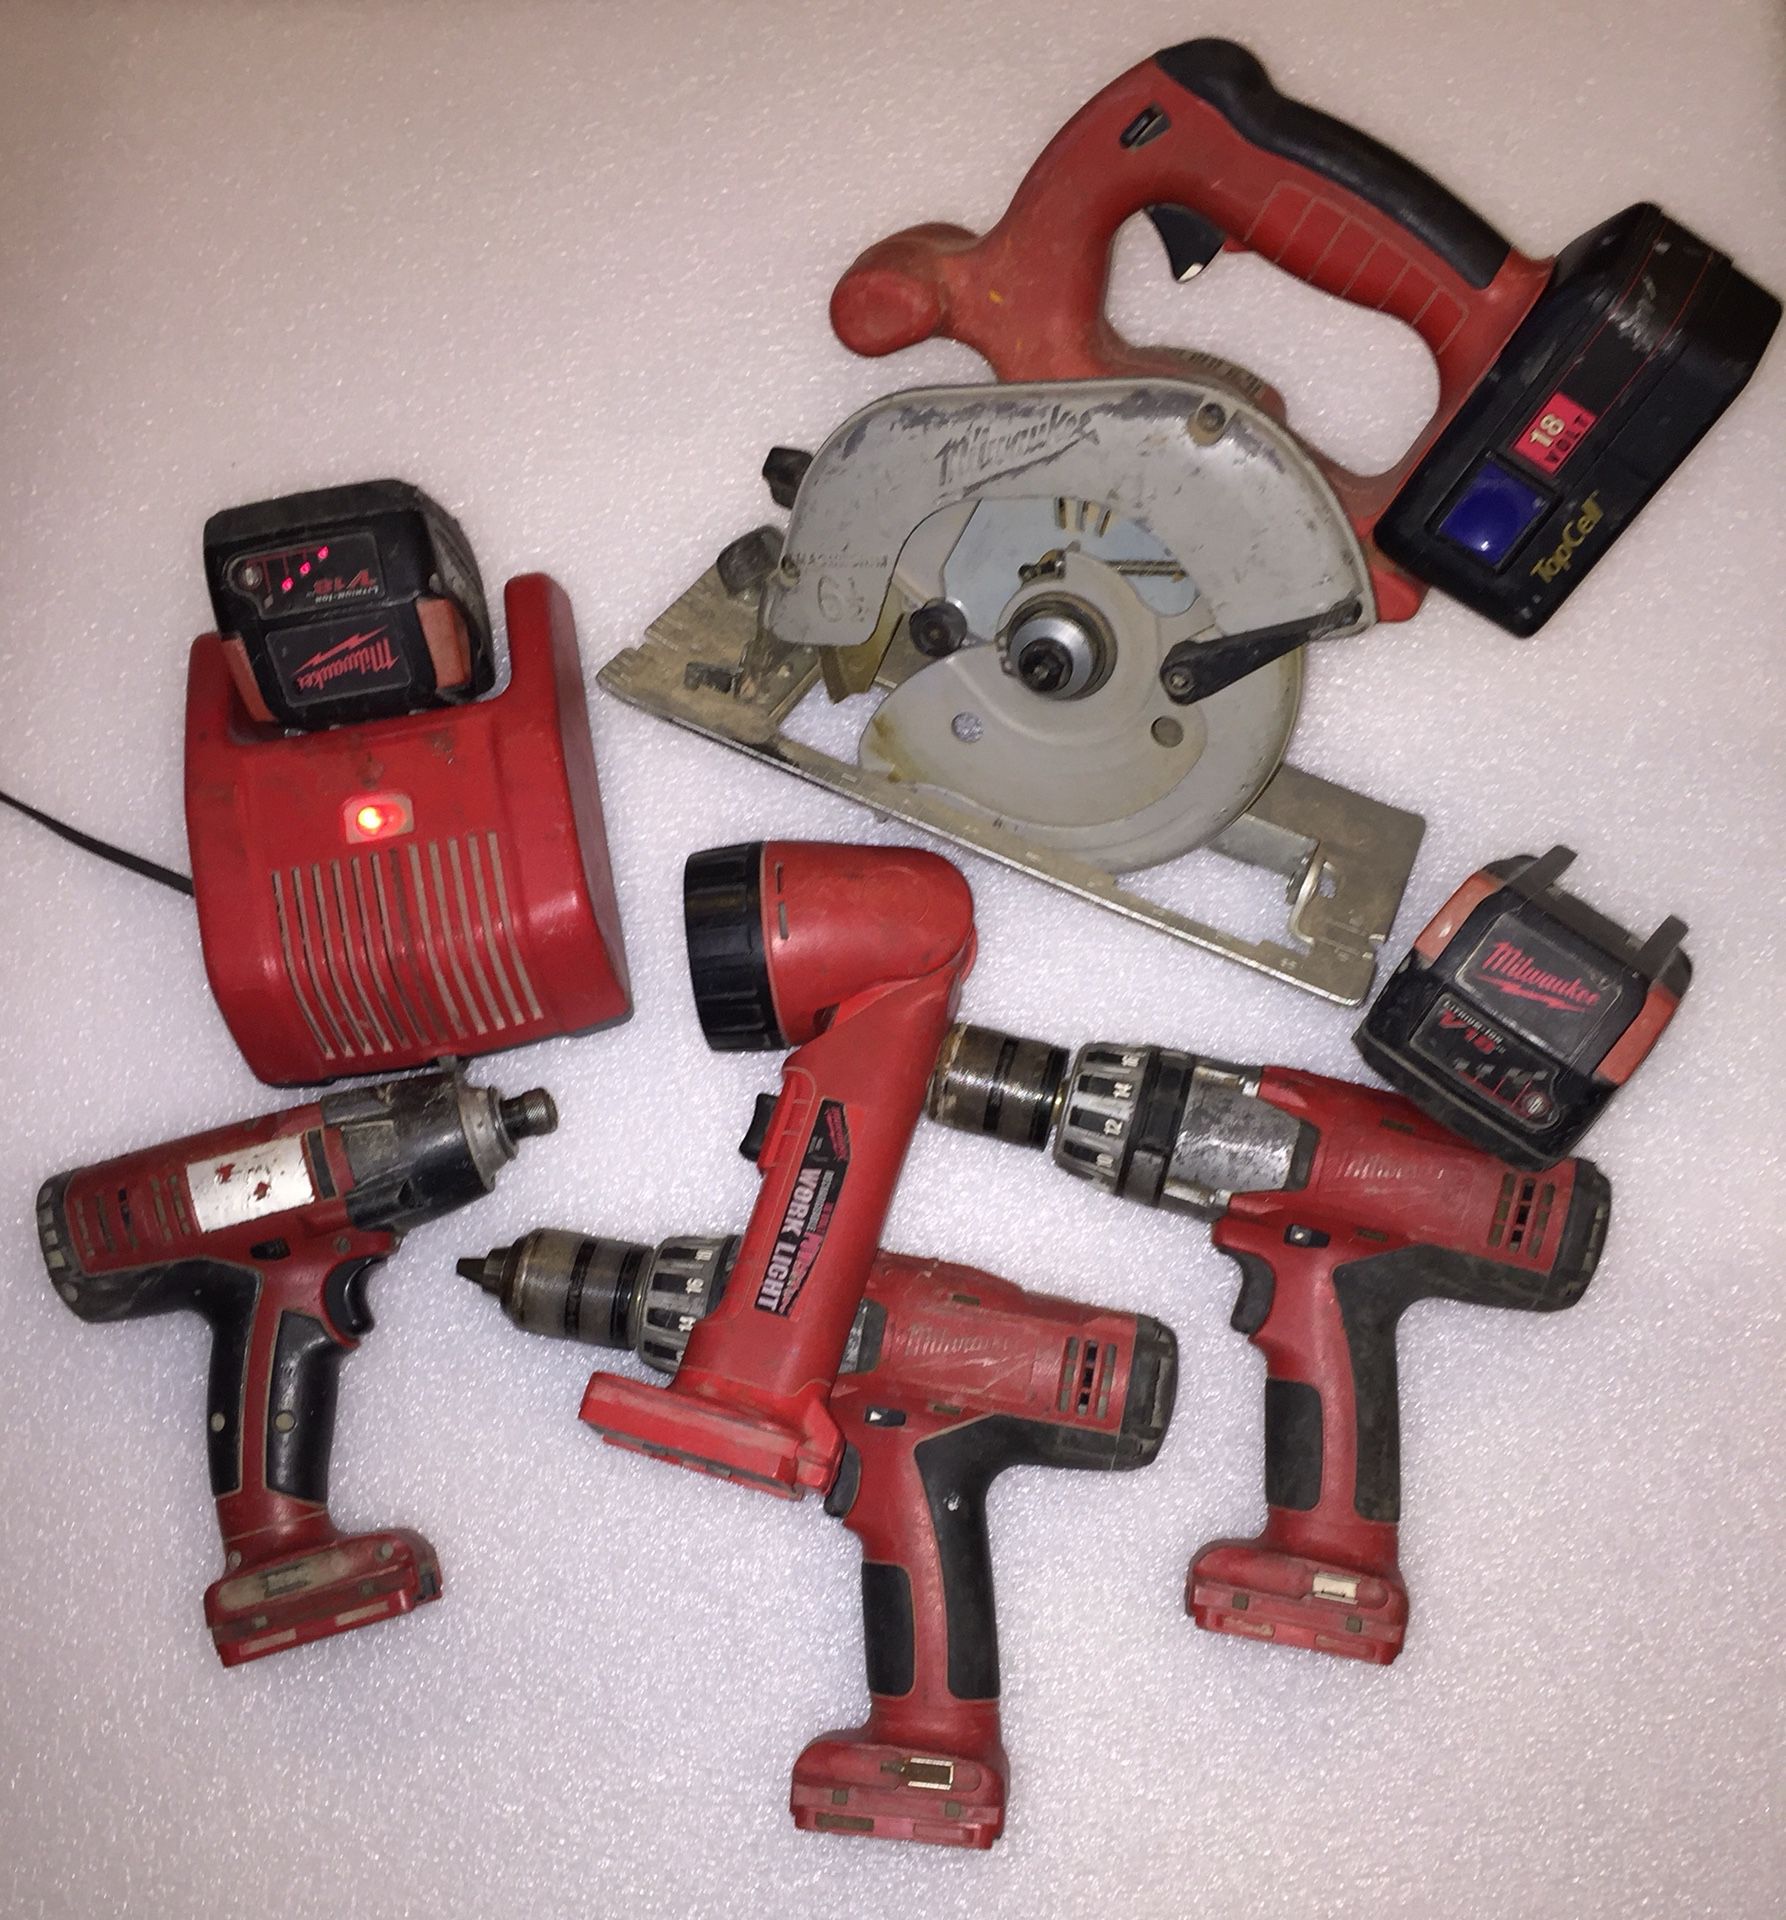 Milwaukee 18v combo kit drills, circular saw, flashlight,